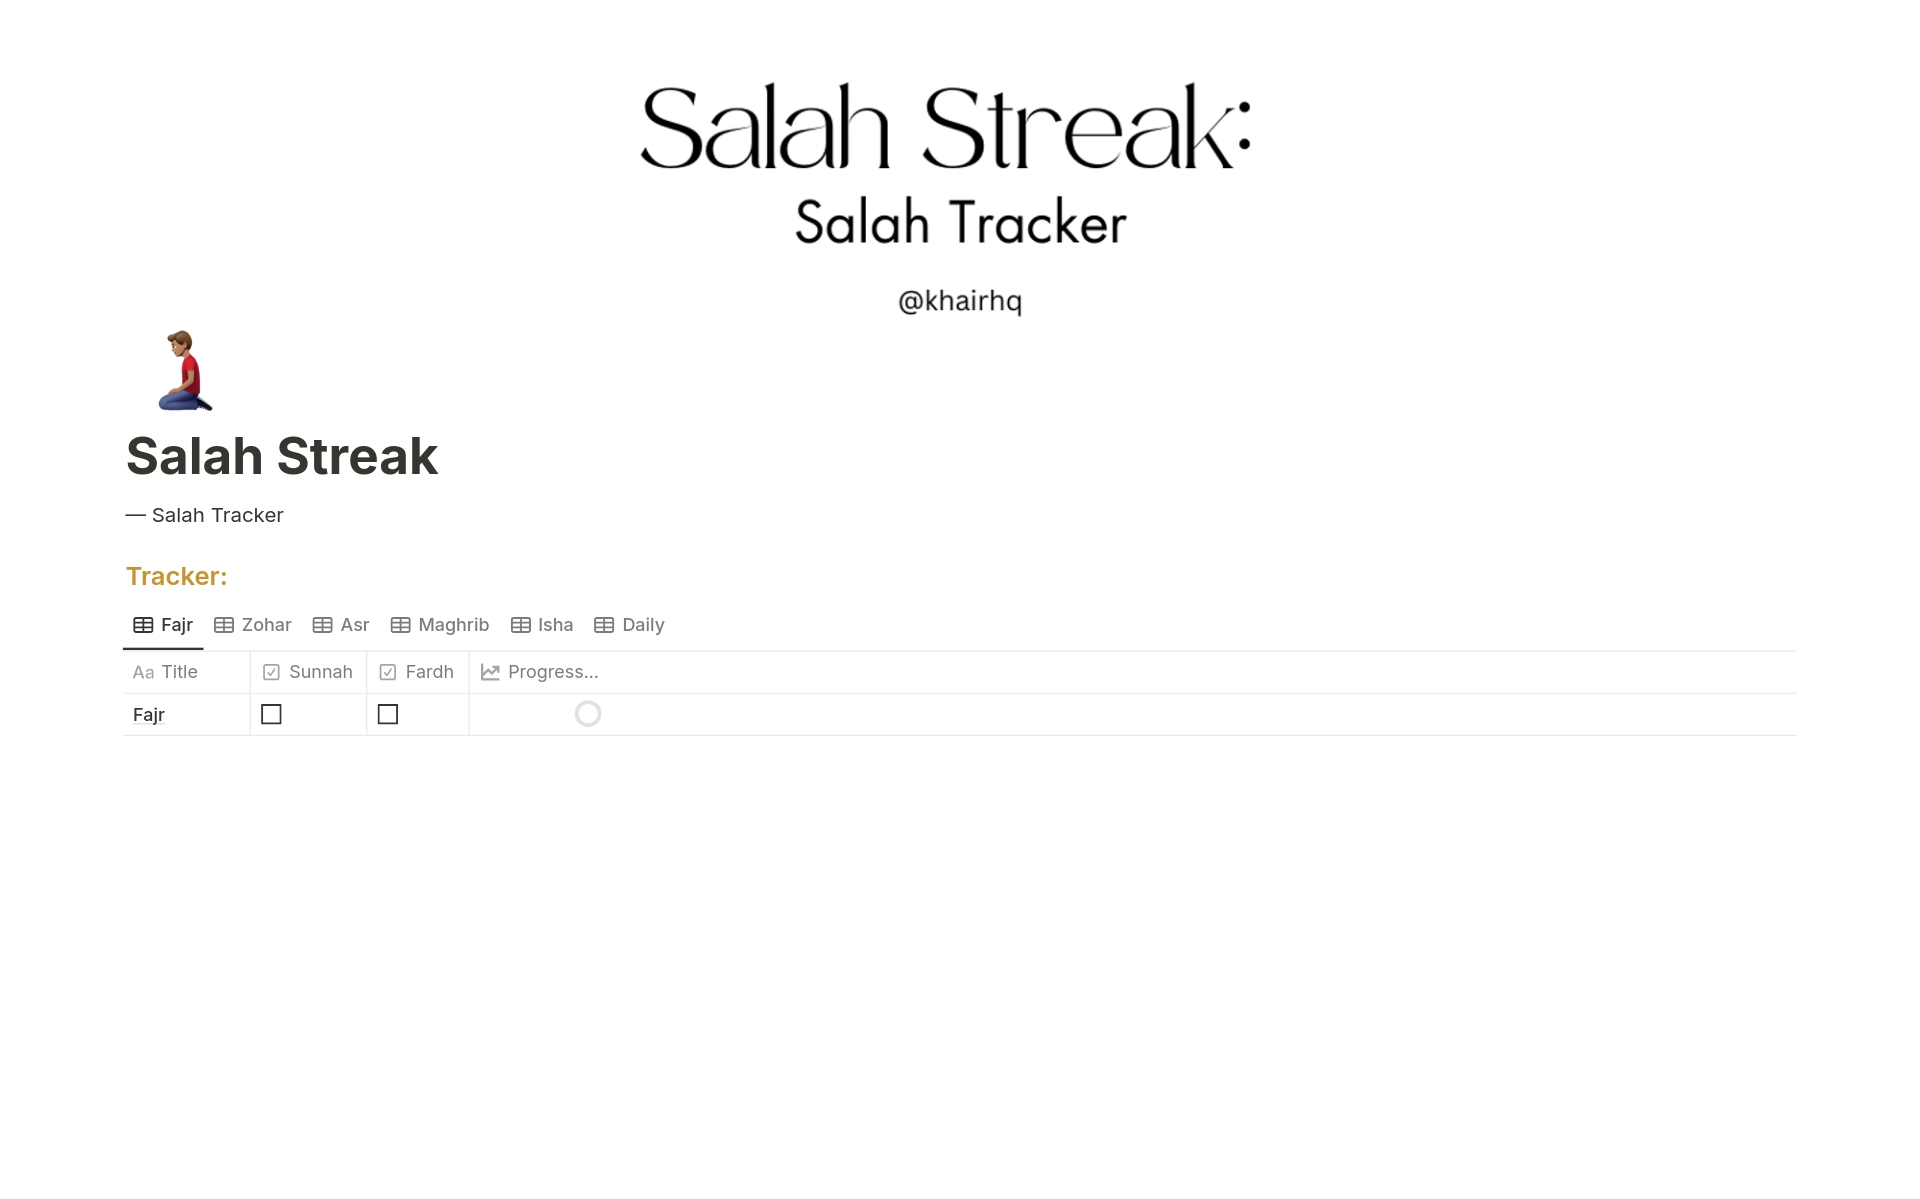 Vista previa de plantilla para Salah Streak